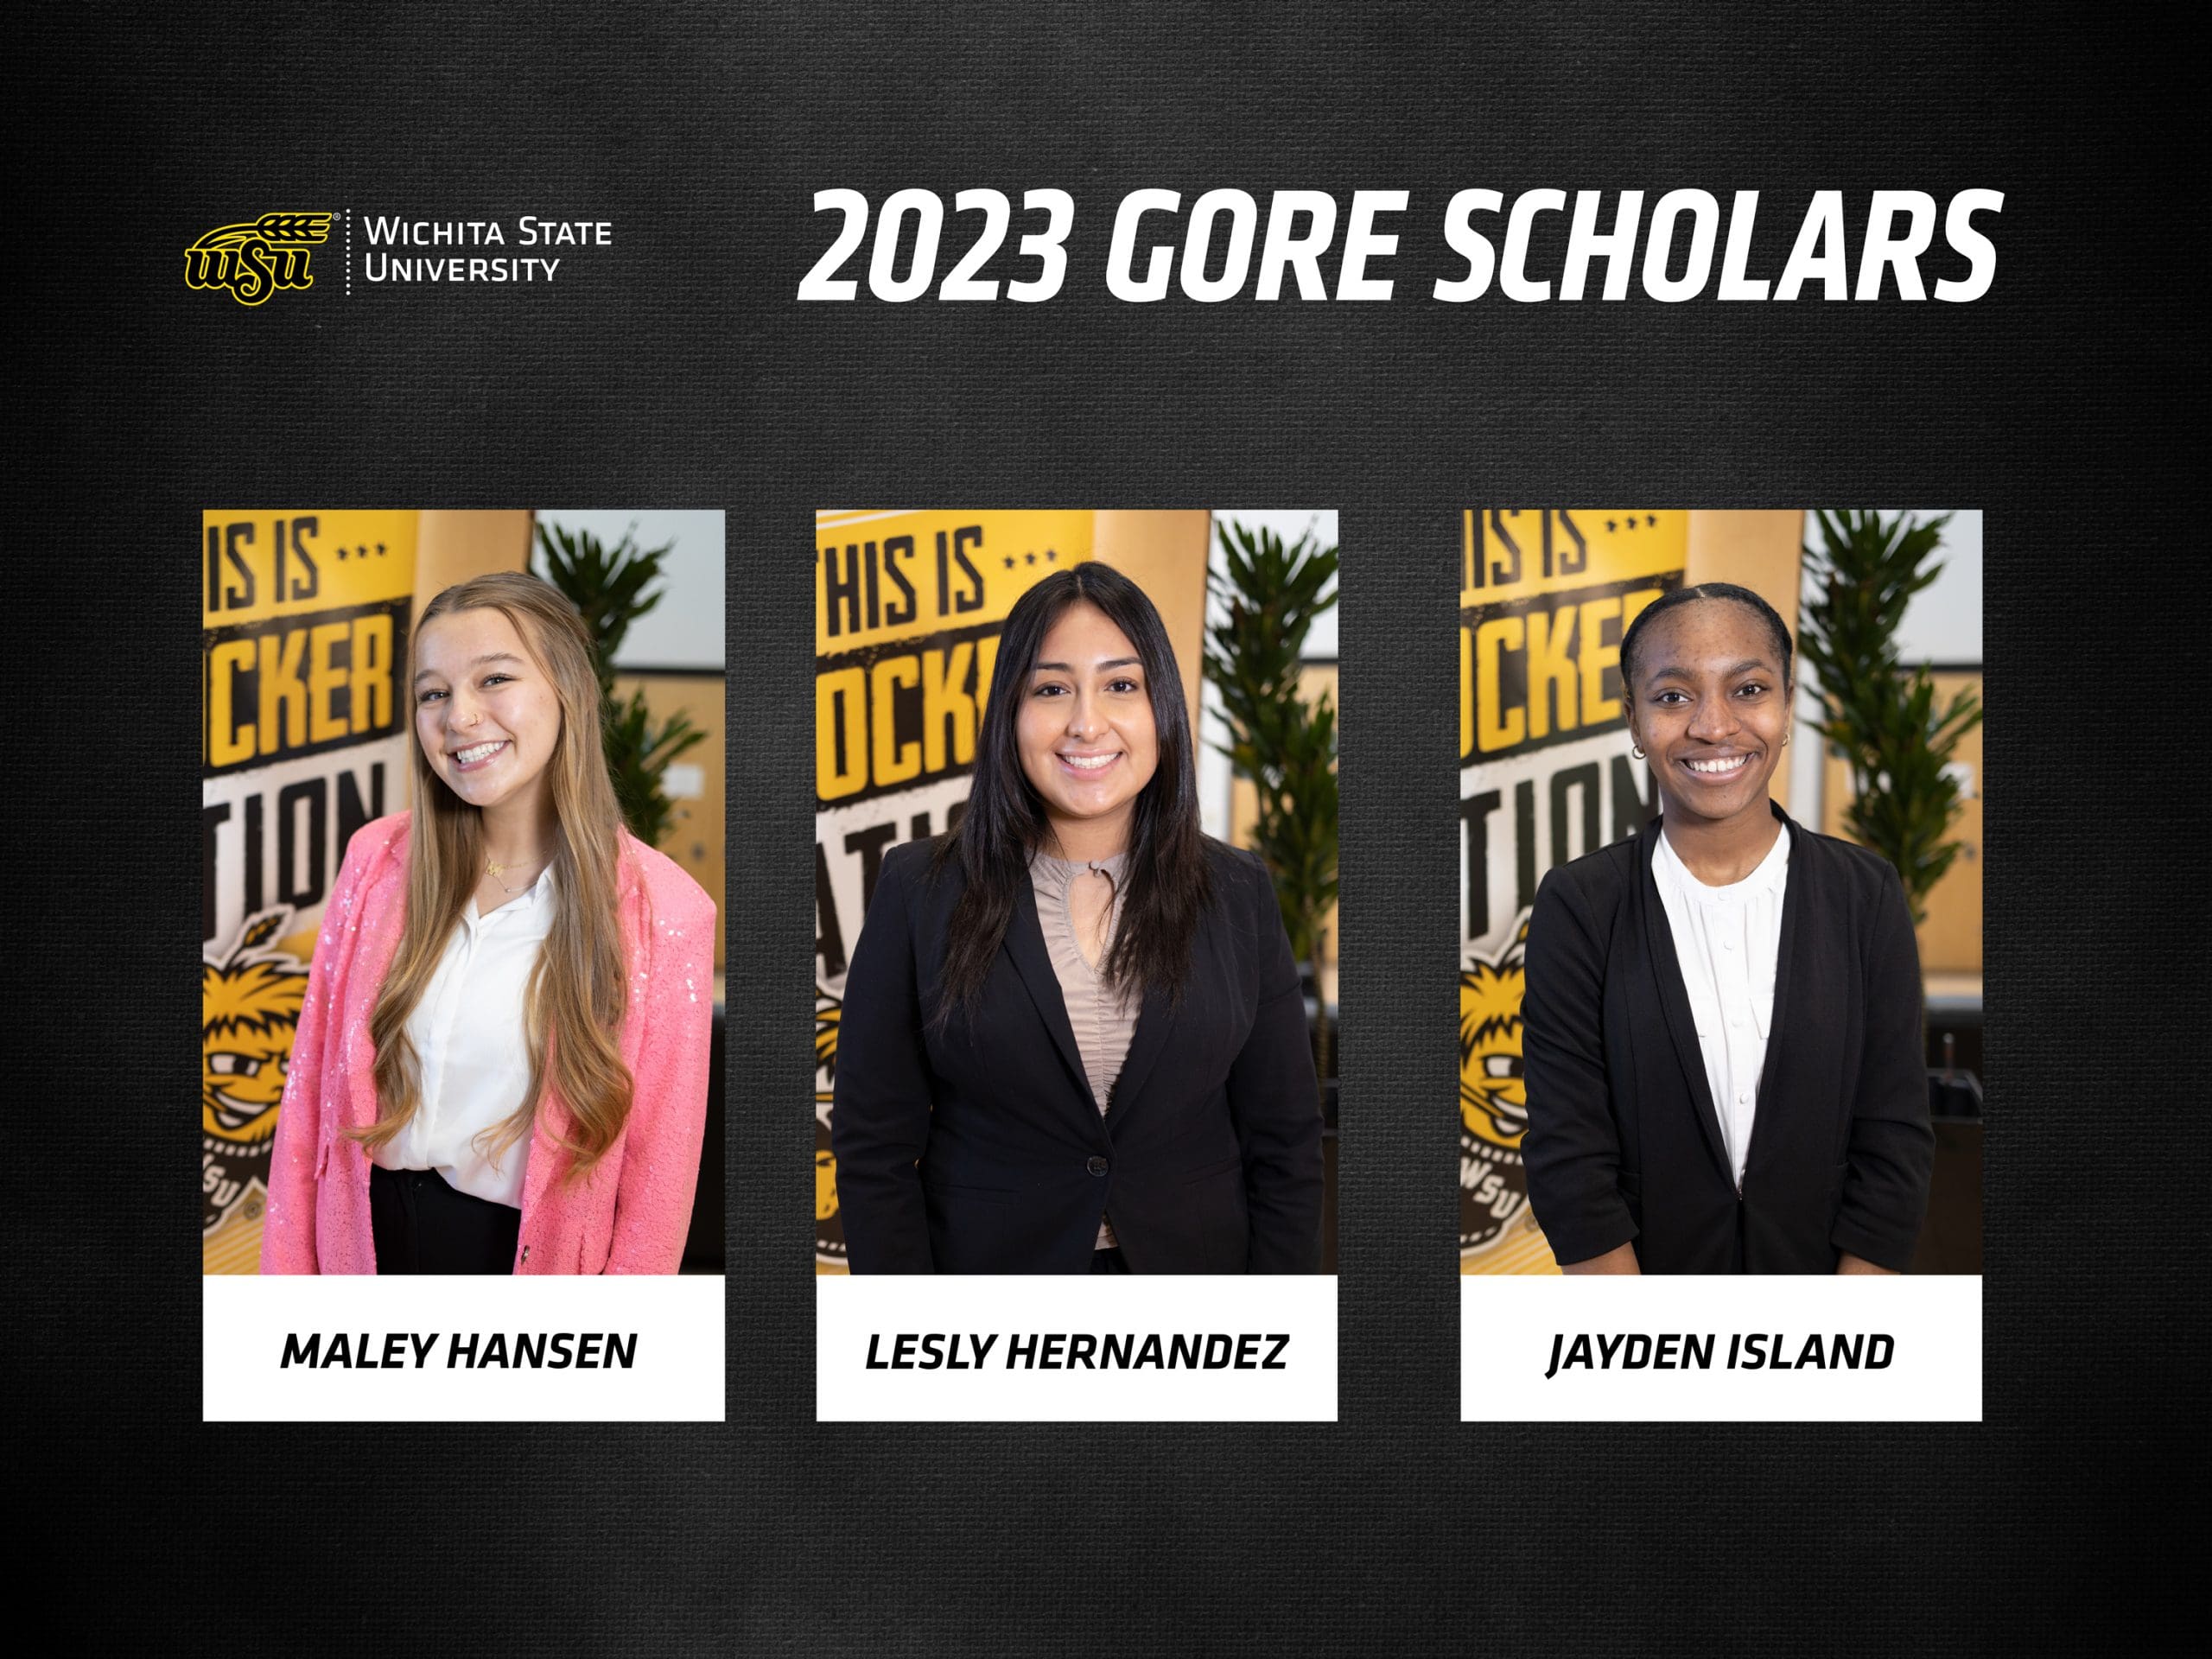 Photos of the recipients of the 2023 Harry Gore Memorial Scholarship, Maley Hansen, Lesly Hernandez and Jayden Island.